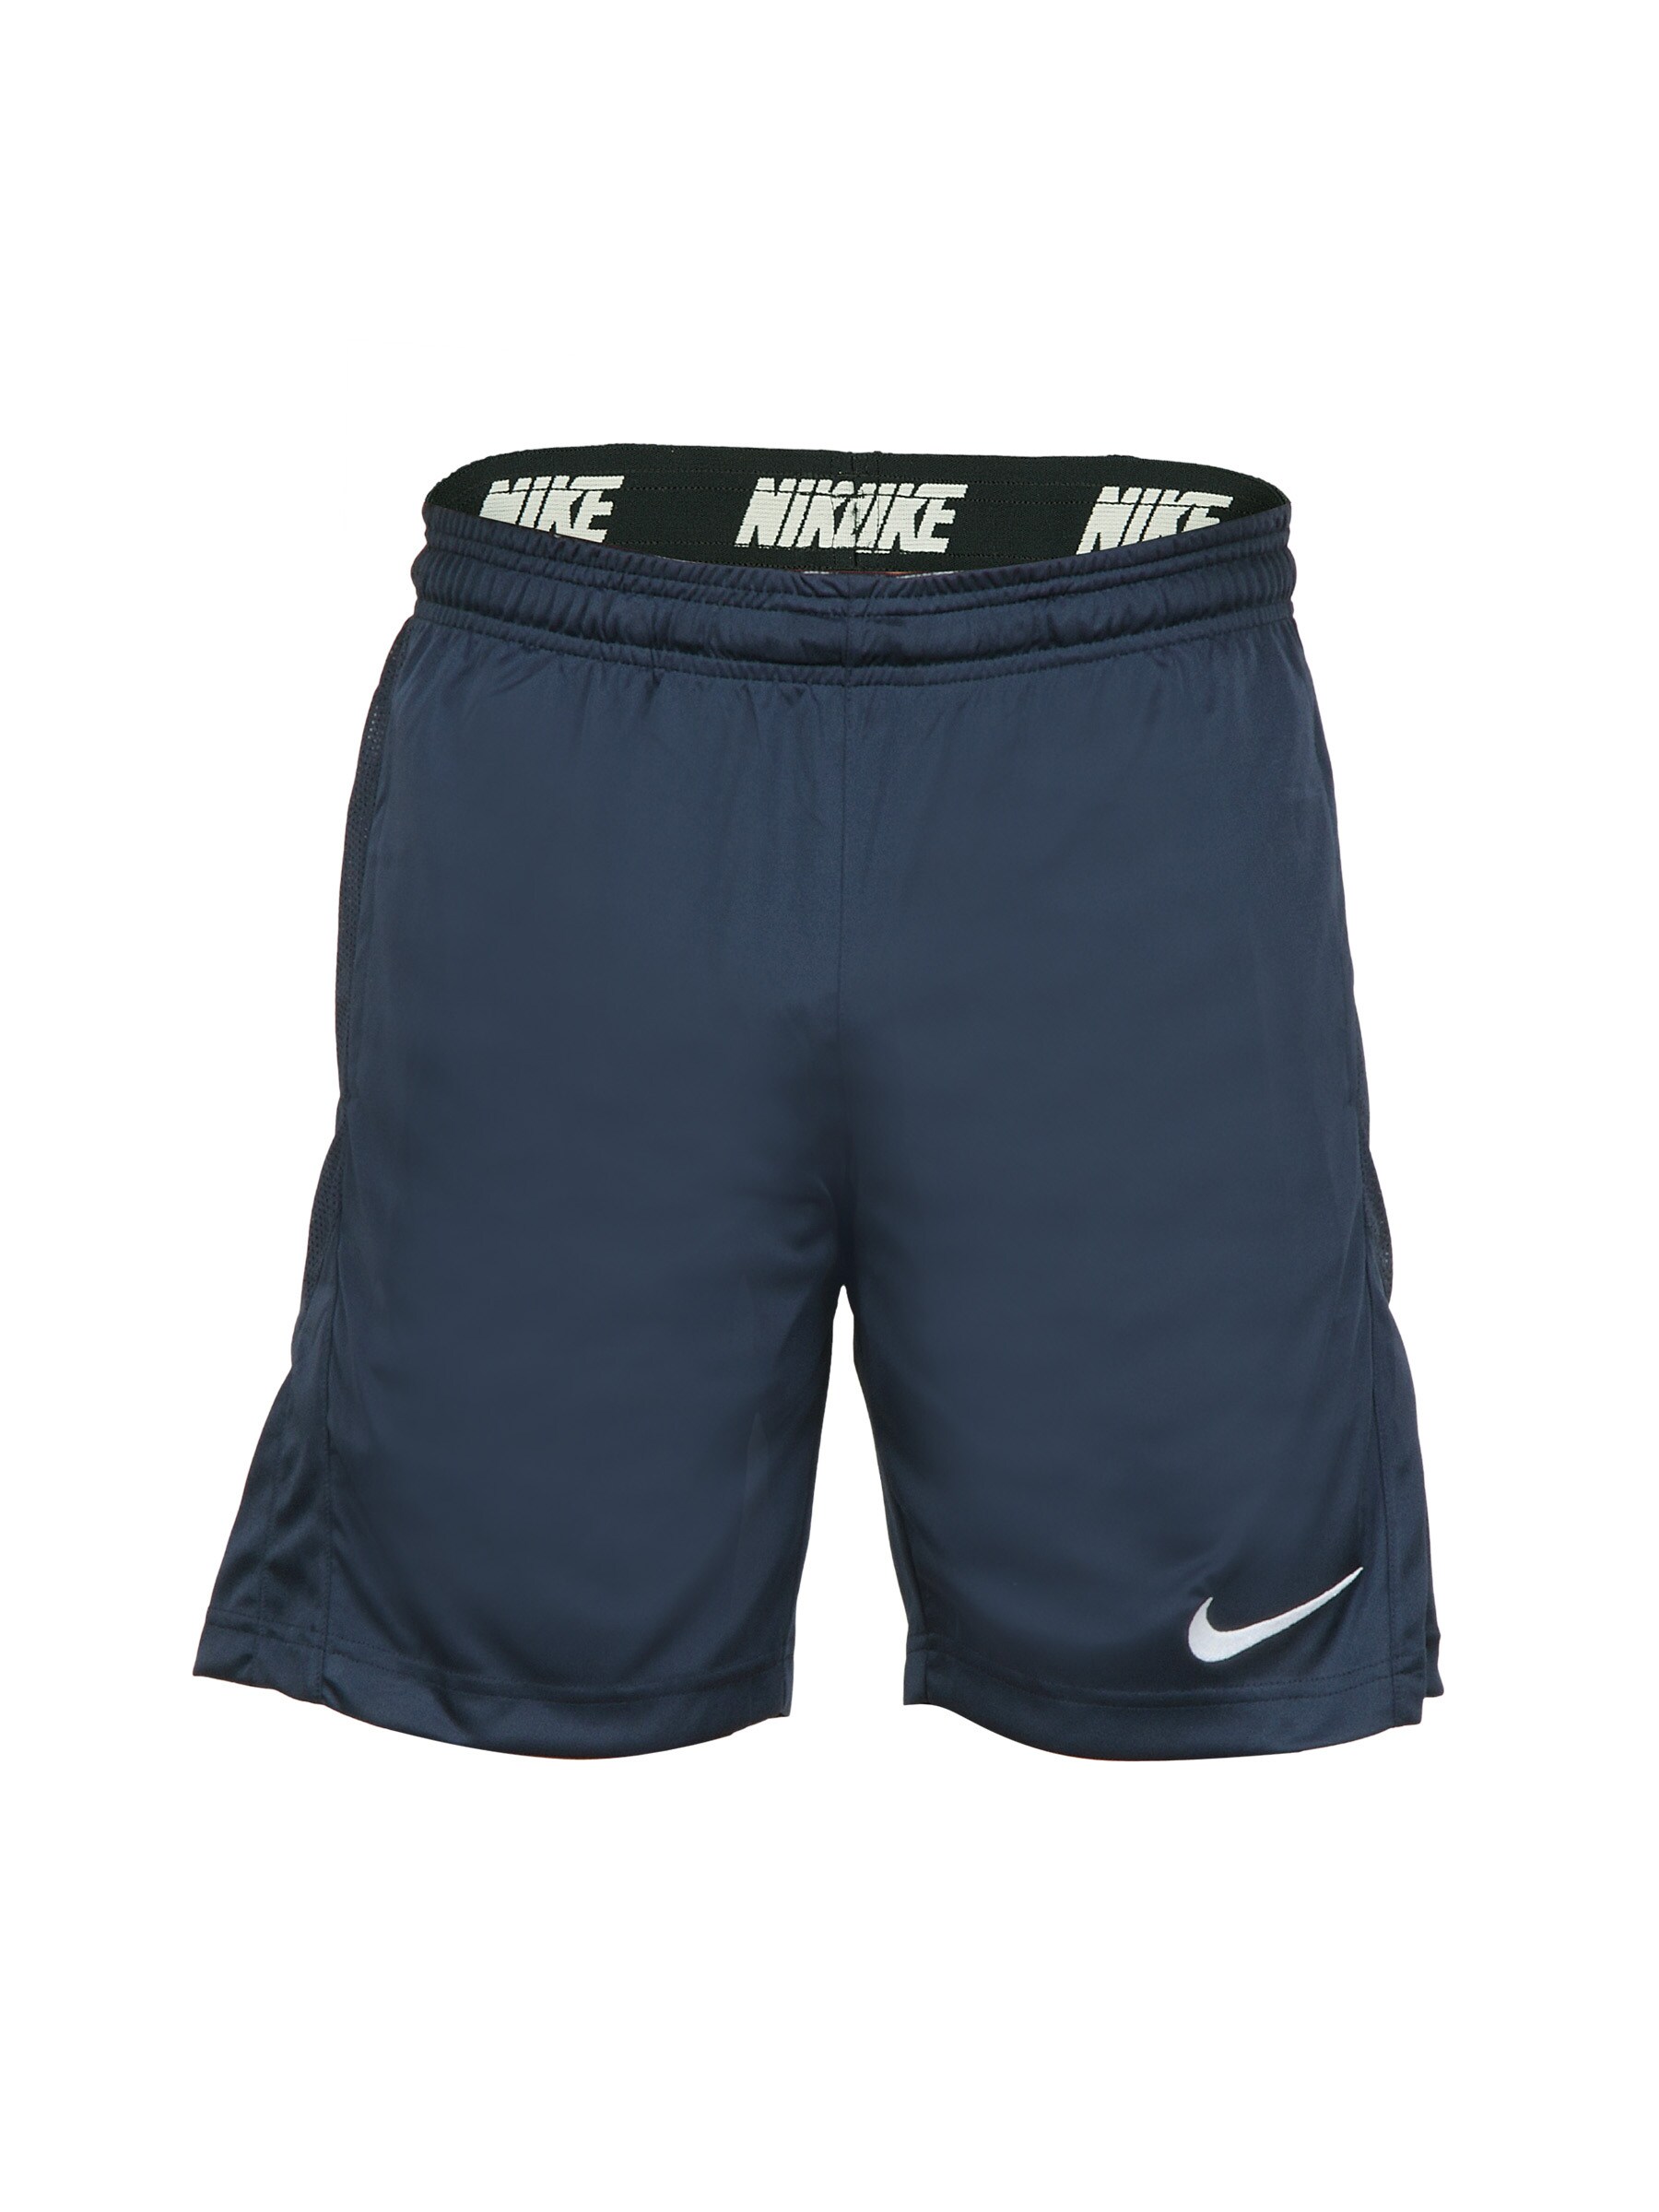 Nike Men Solid Navy Blue Shorts